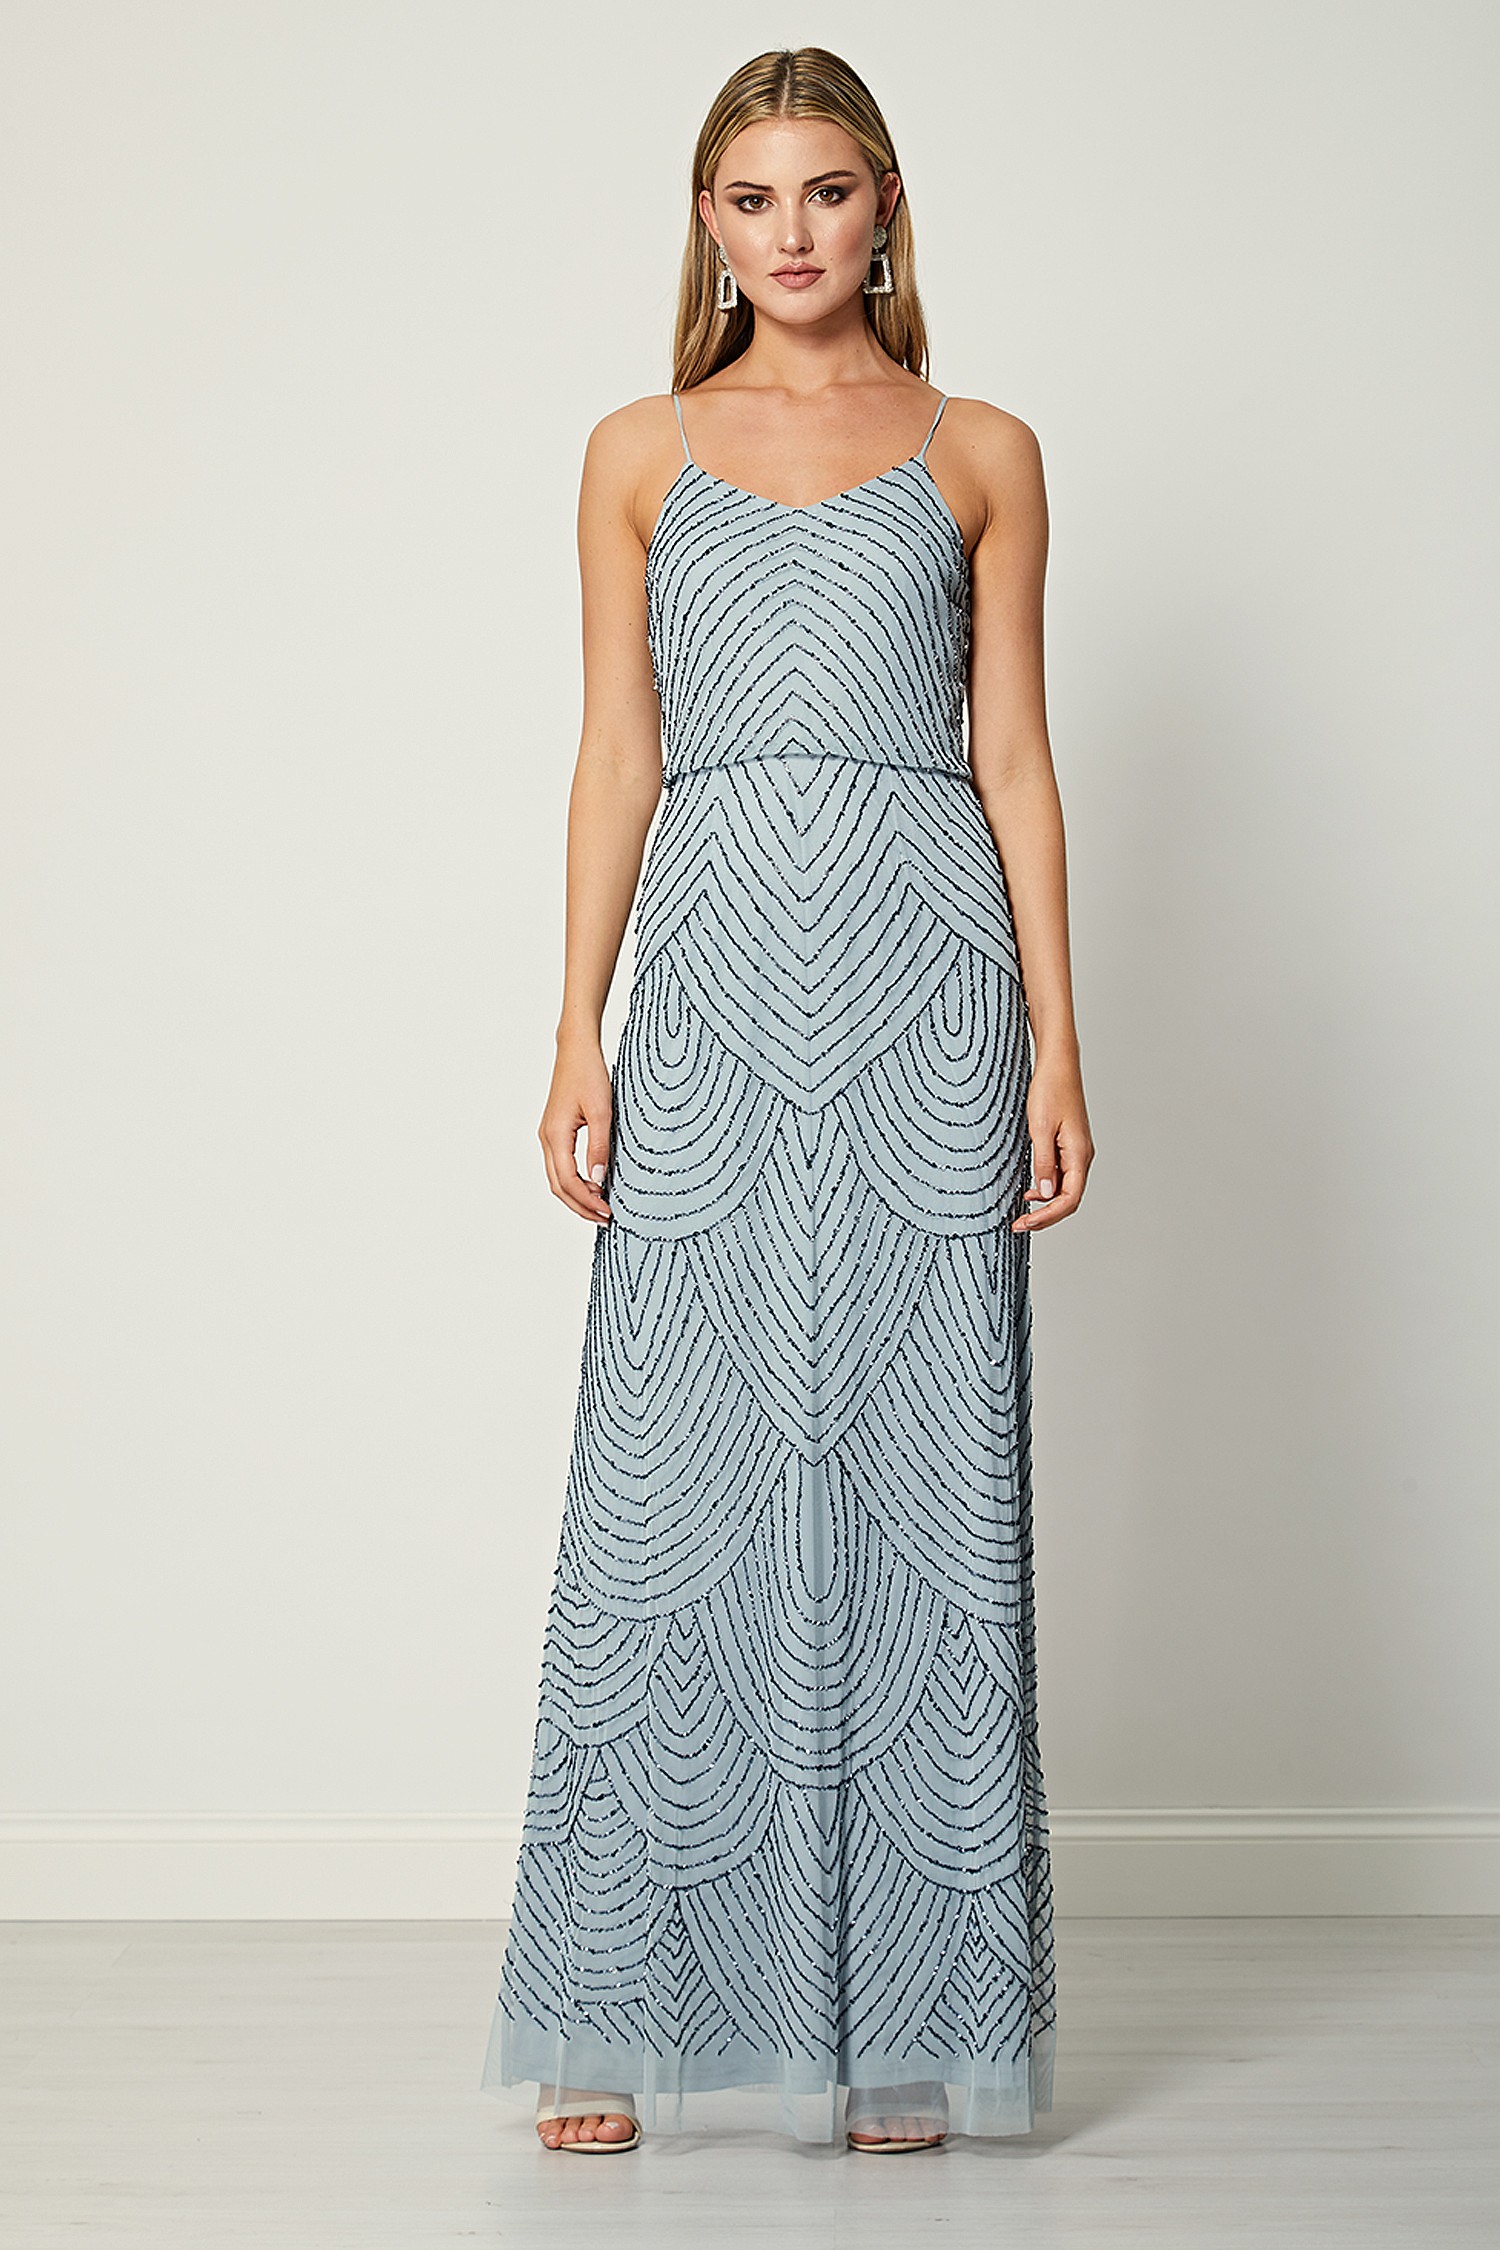 ANGELEYE Cami Sequin Stripe Embellished Maxi Dress in Light Blue